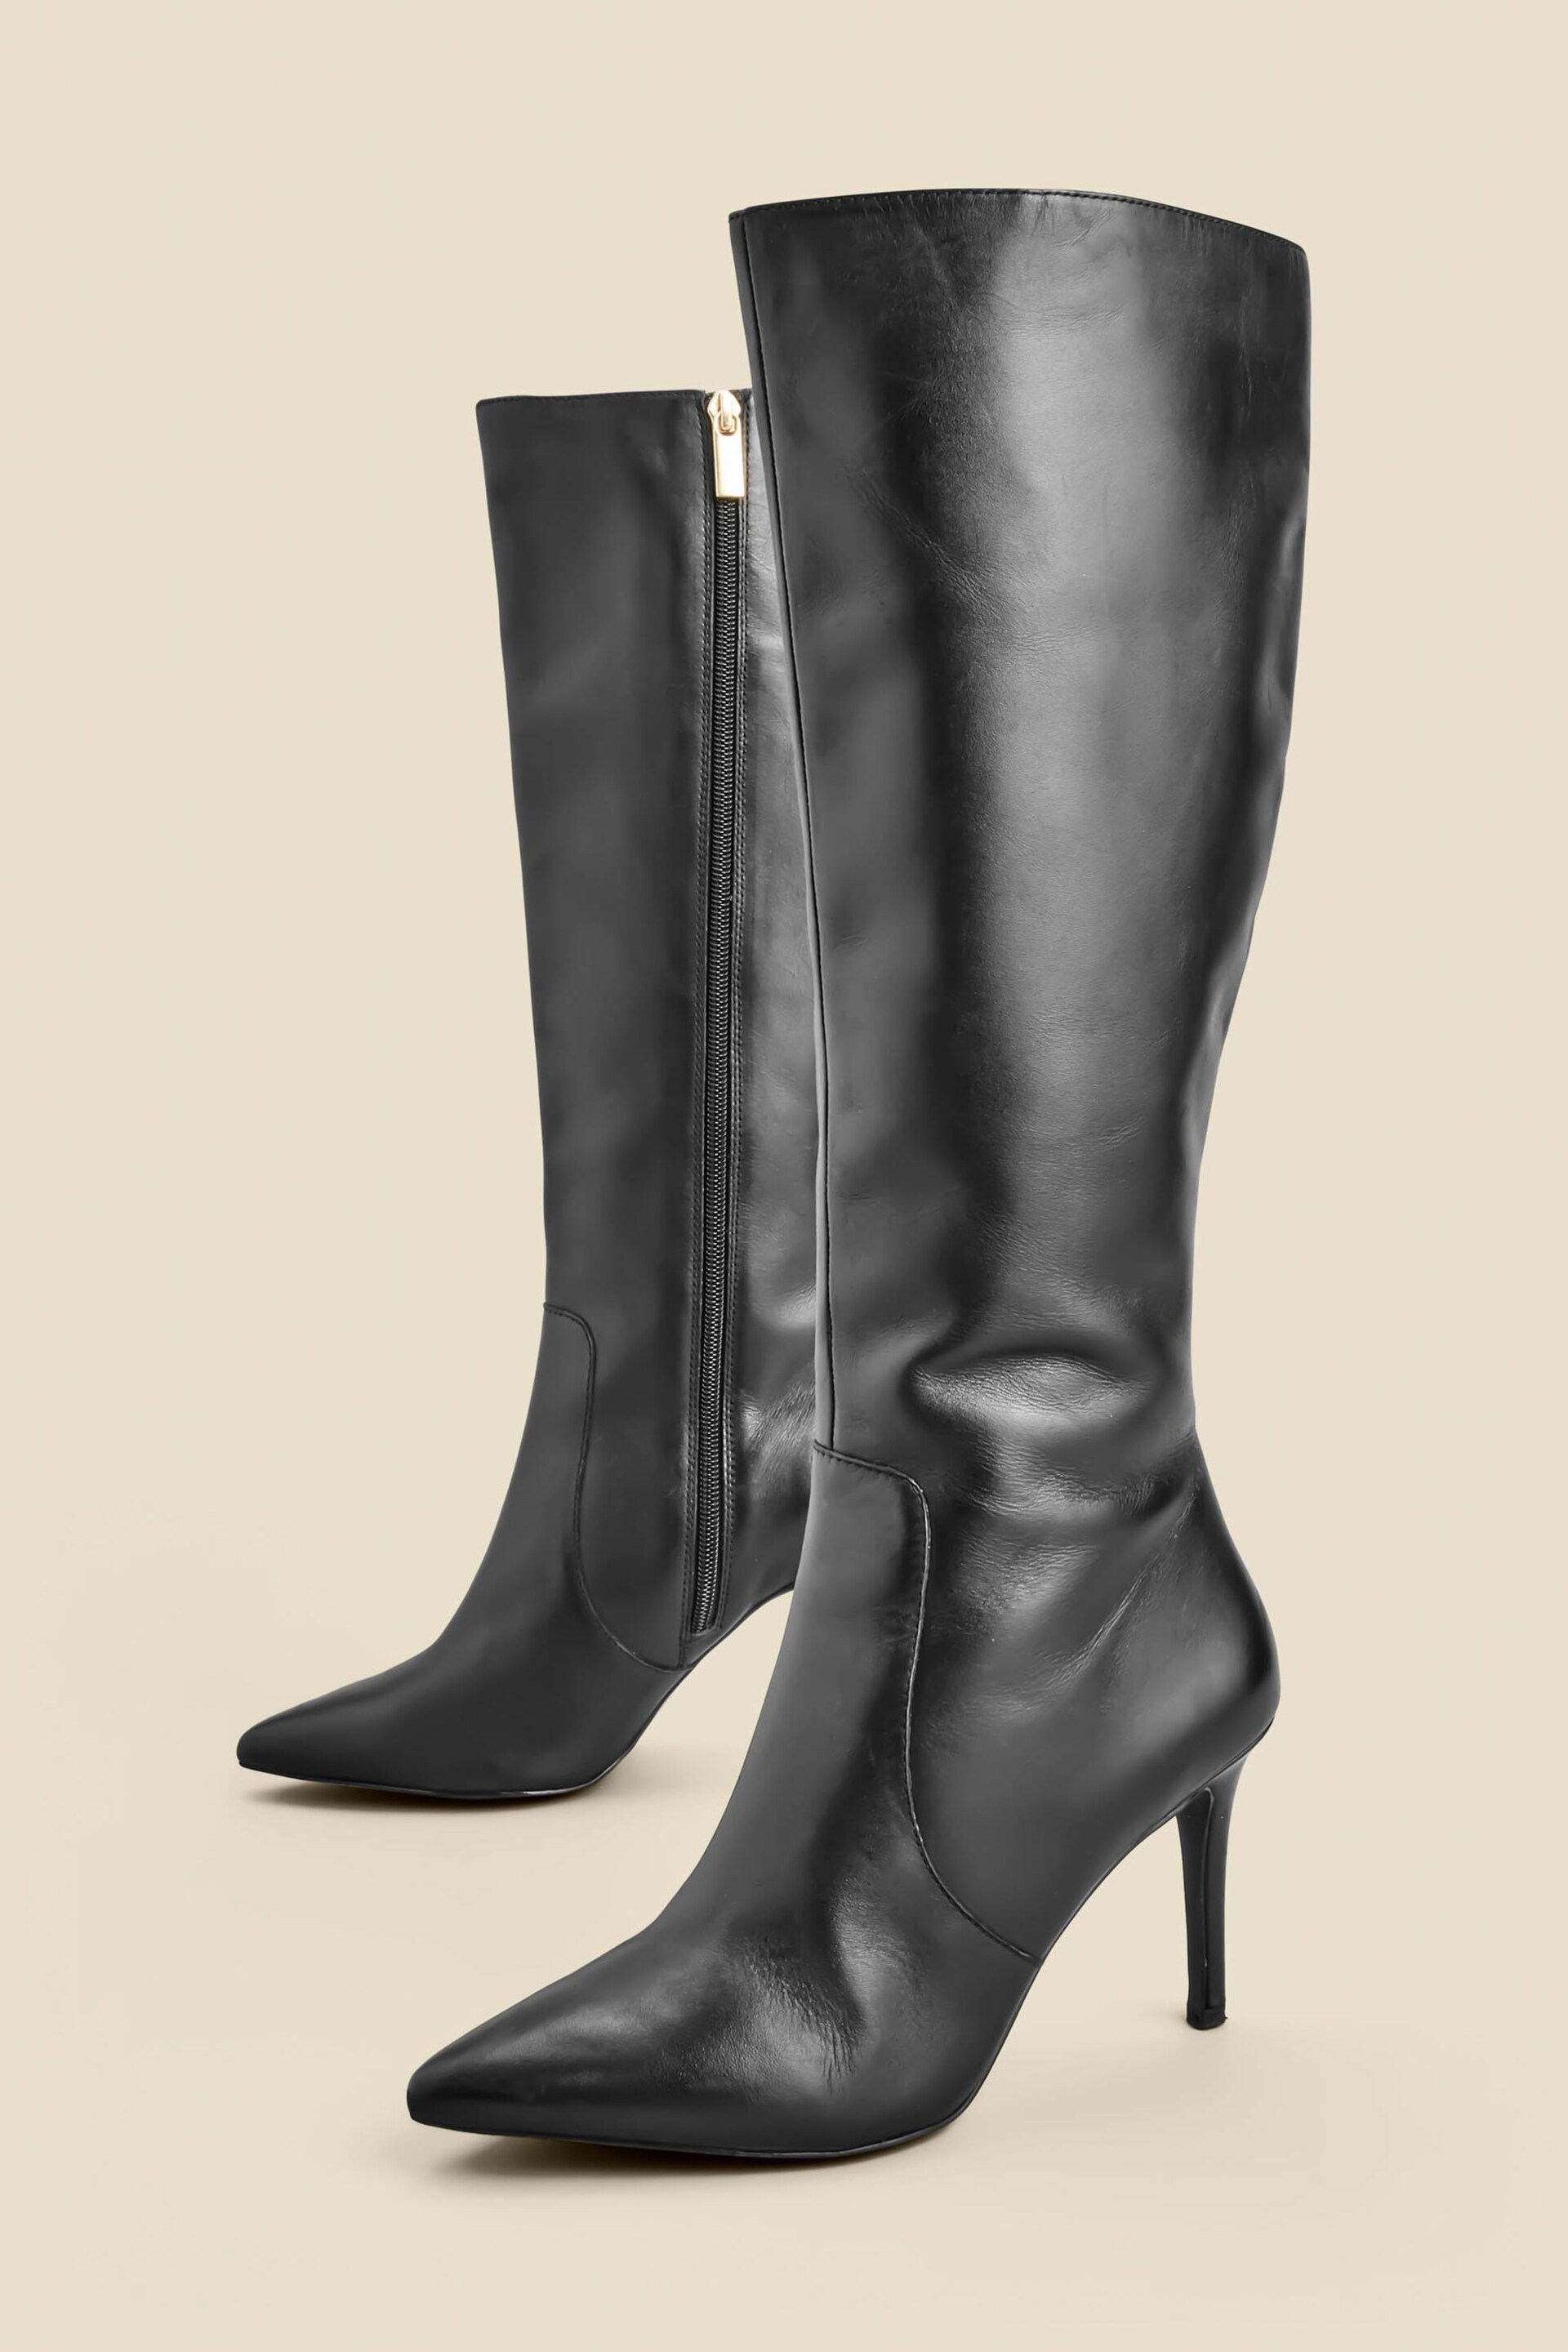 Sosandar Black Leather Stiletto Heel Knee High Boots - Image 5 of 5